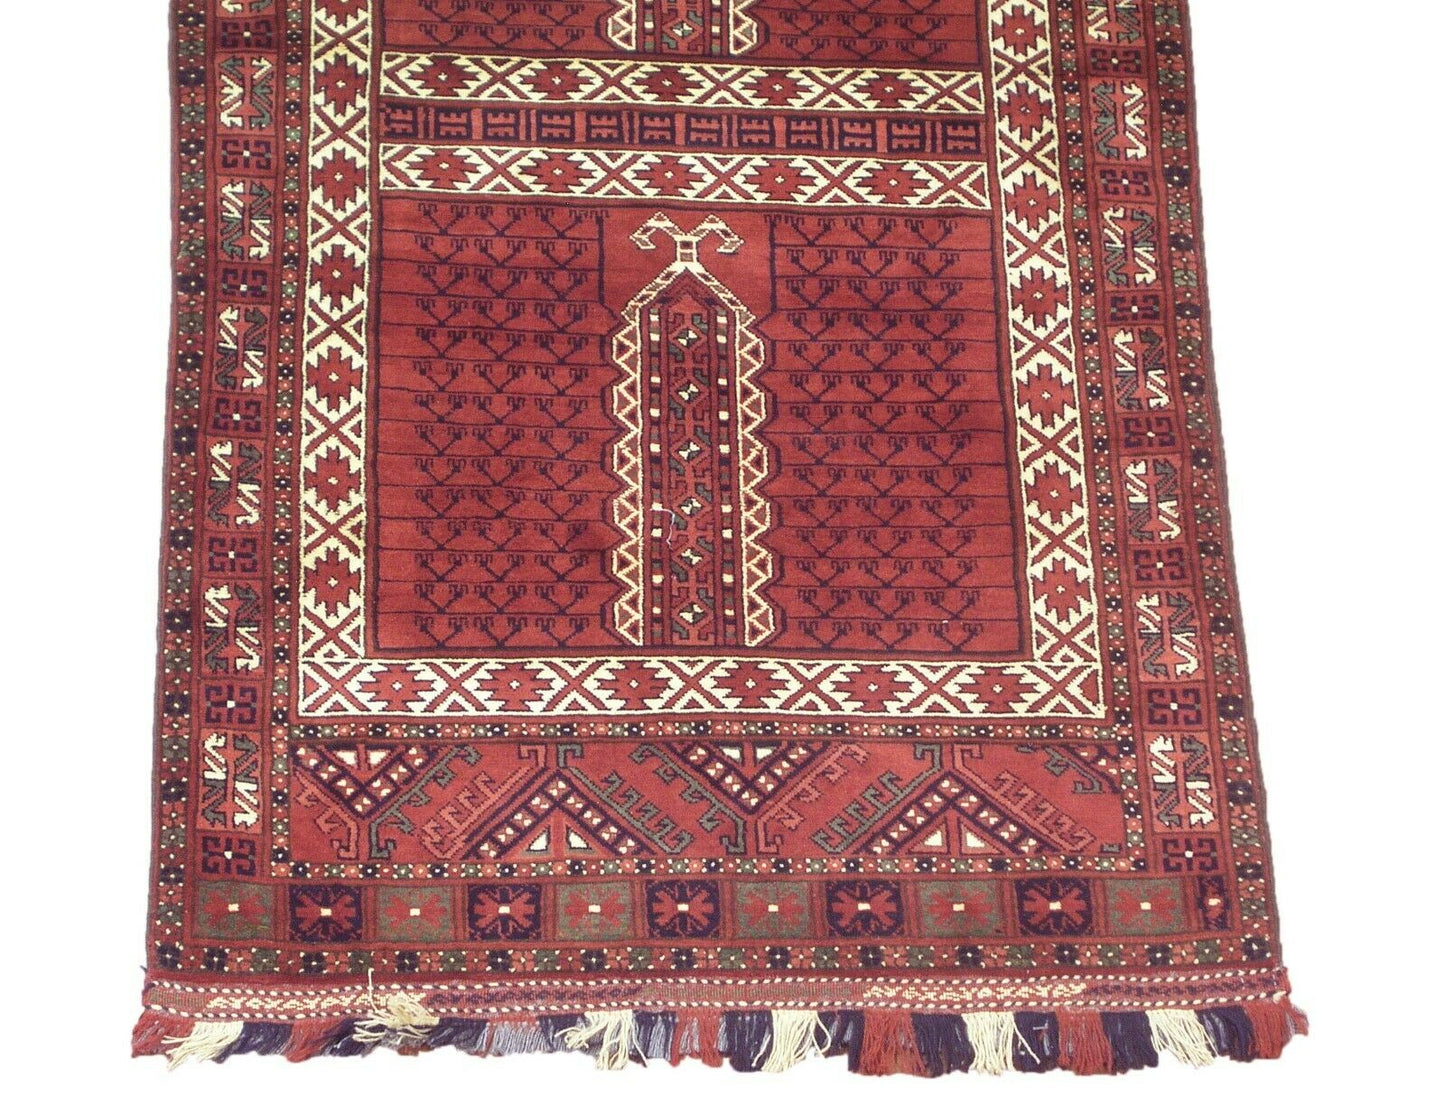 4X6 Fine Hatchli Turkoman Tribal Khal Mohmadi Rug, circa 2000